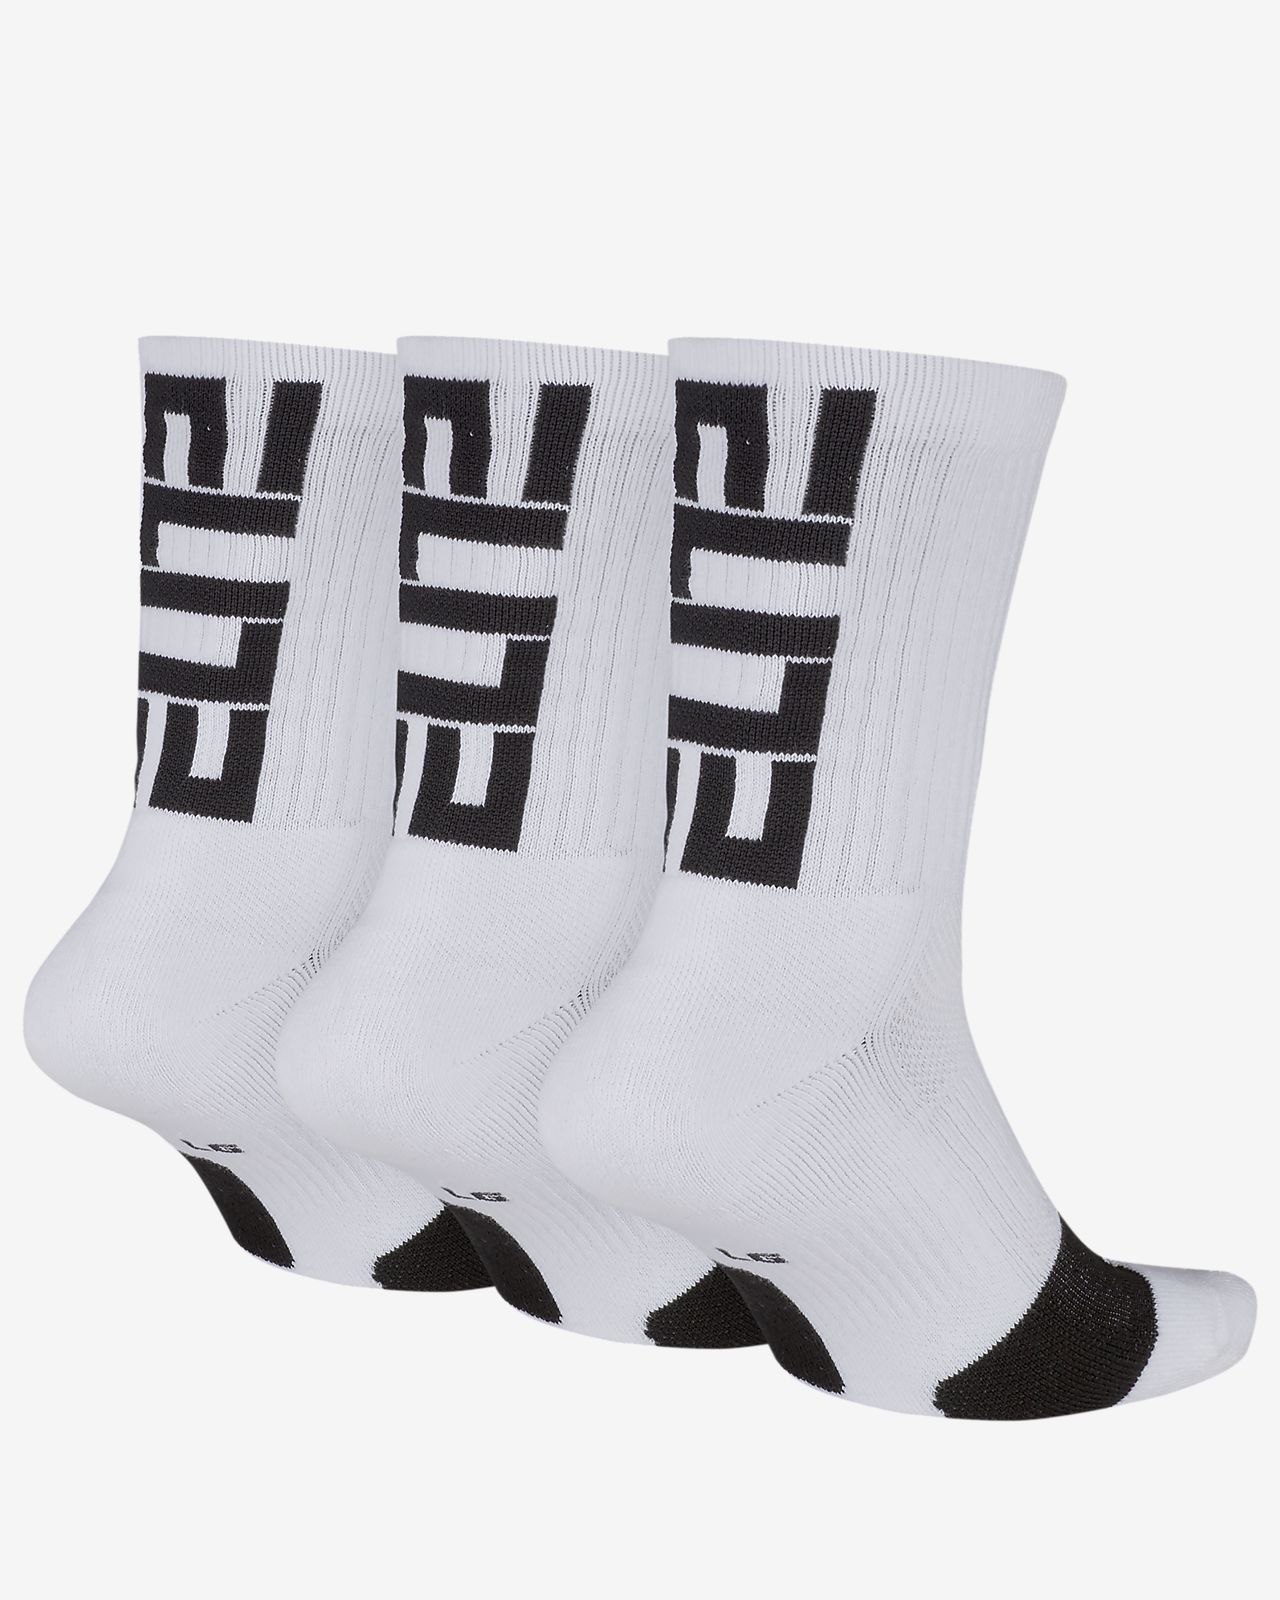 Nike Elite Crew Basketball Socks (3 